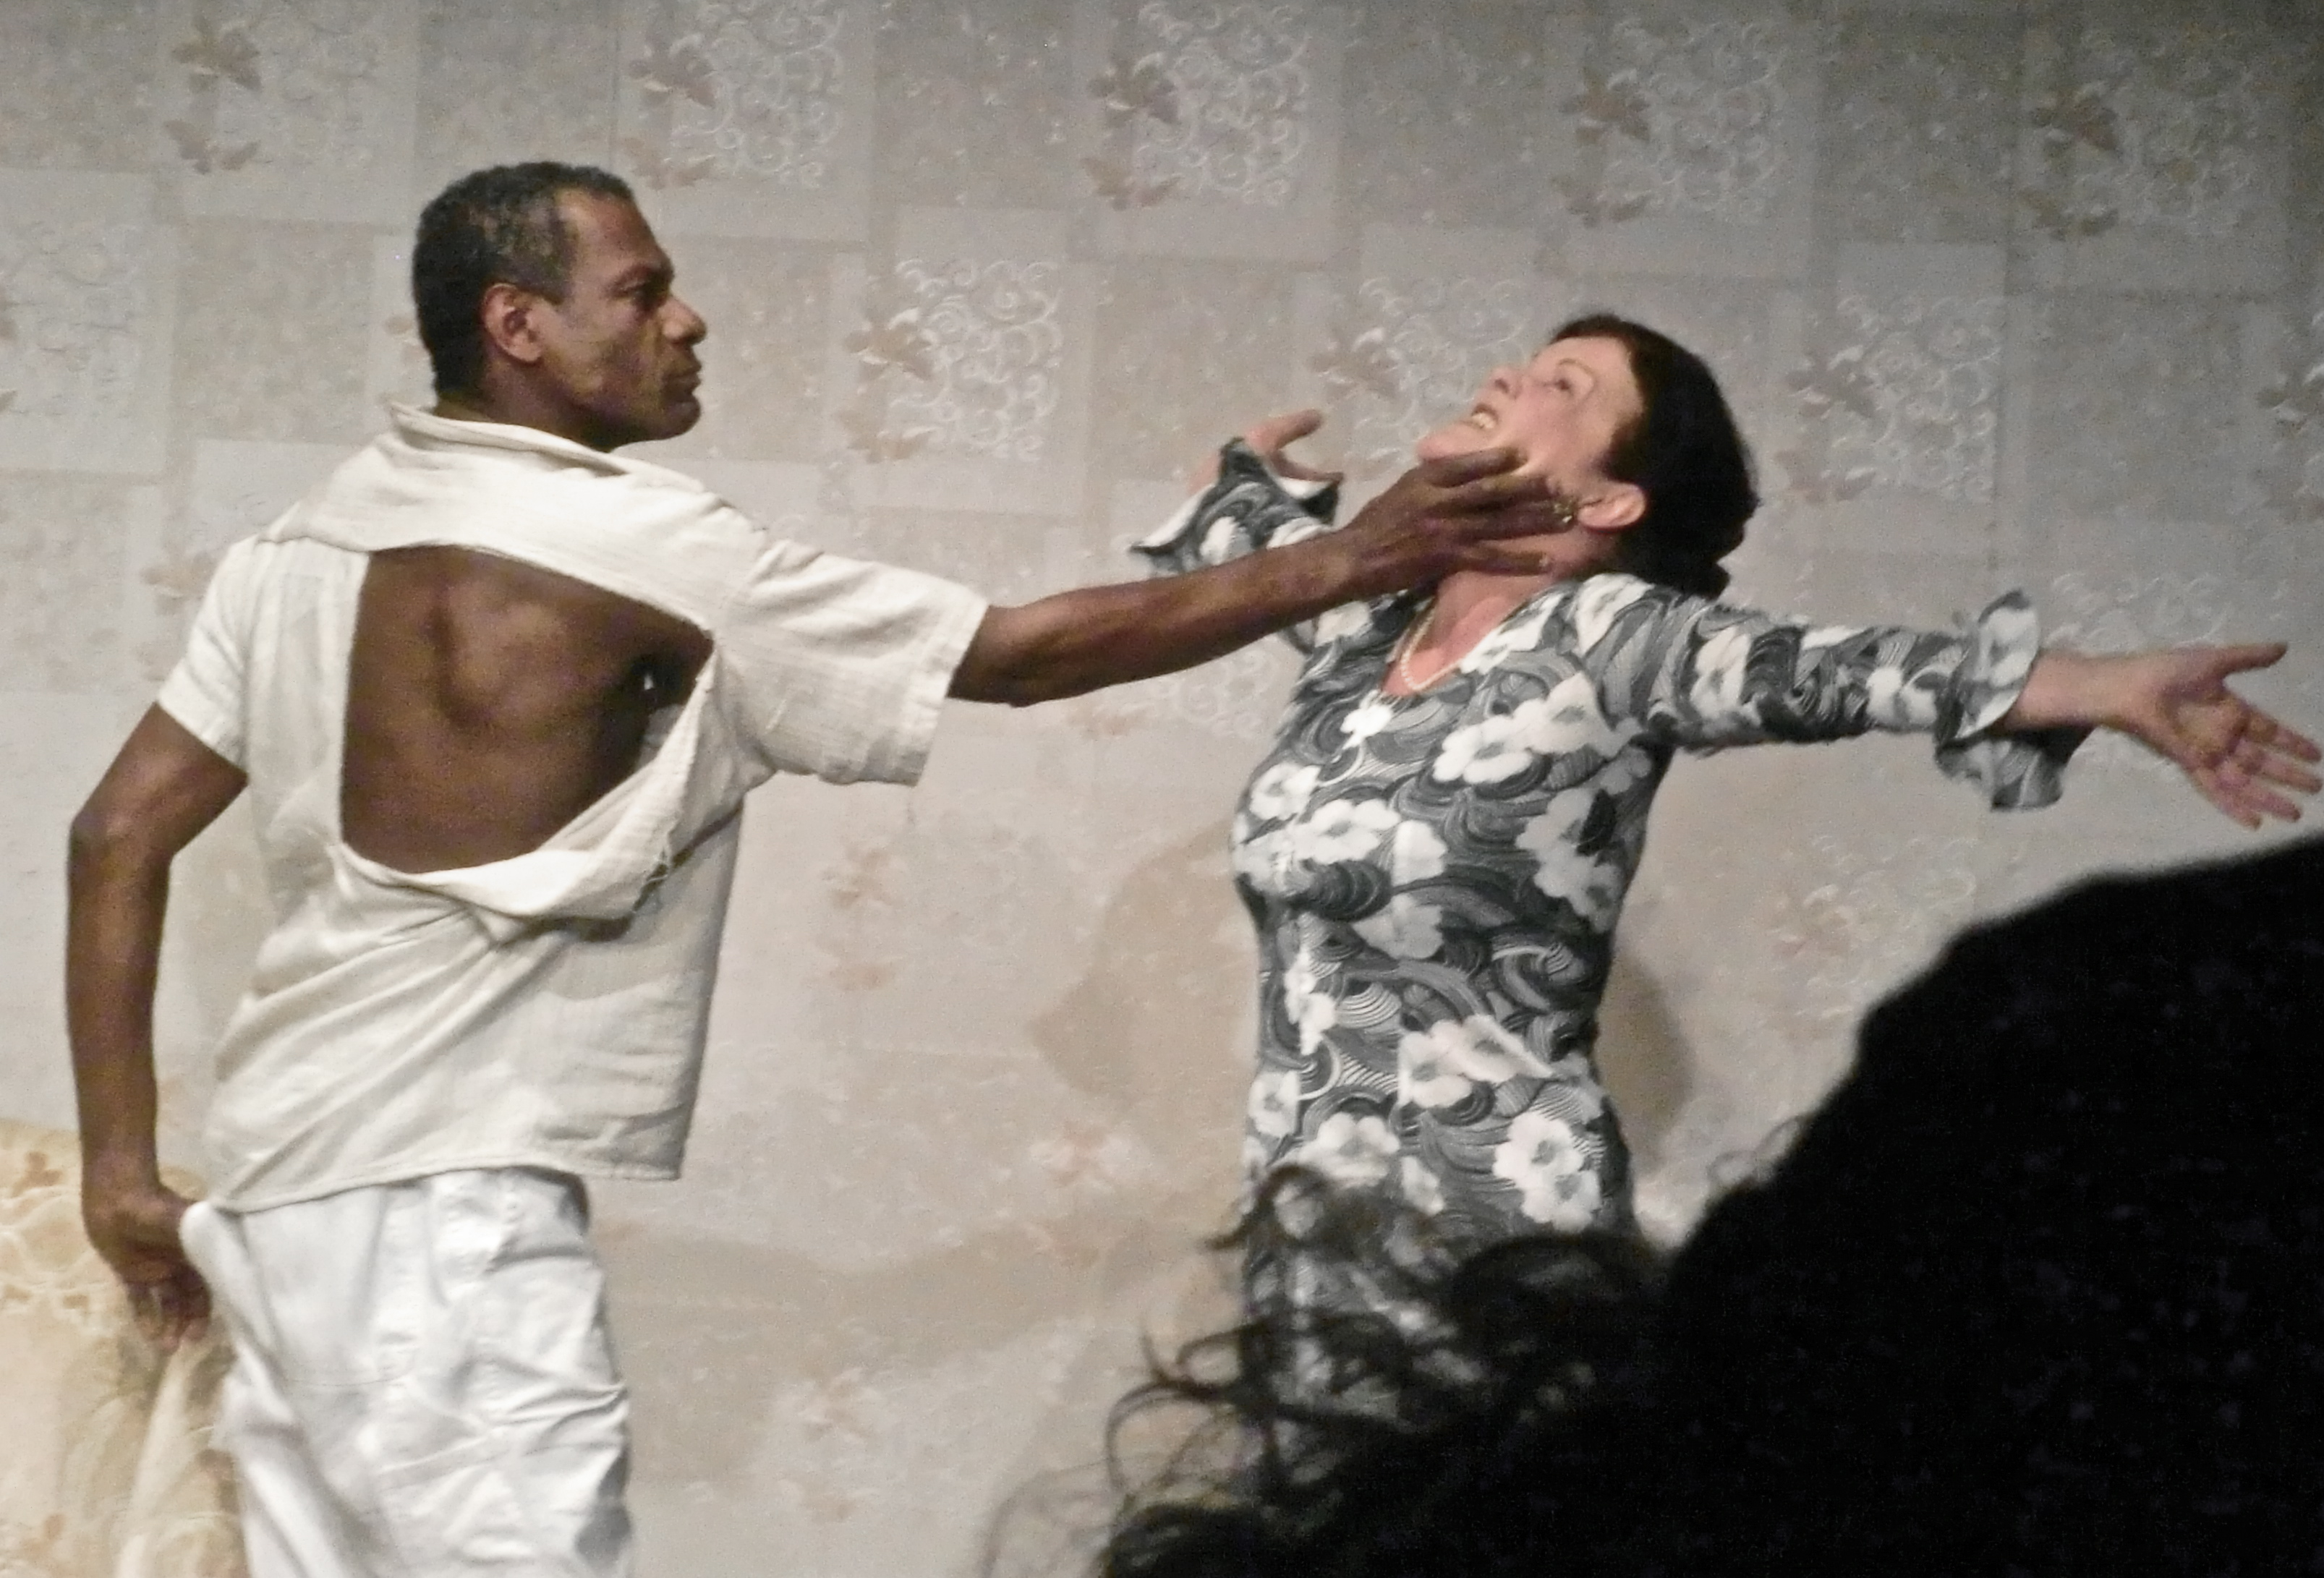 Strike of the Scorpion - Theatre Padrone, Berlin Germany, 2009.